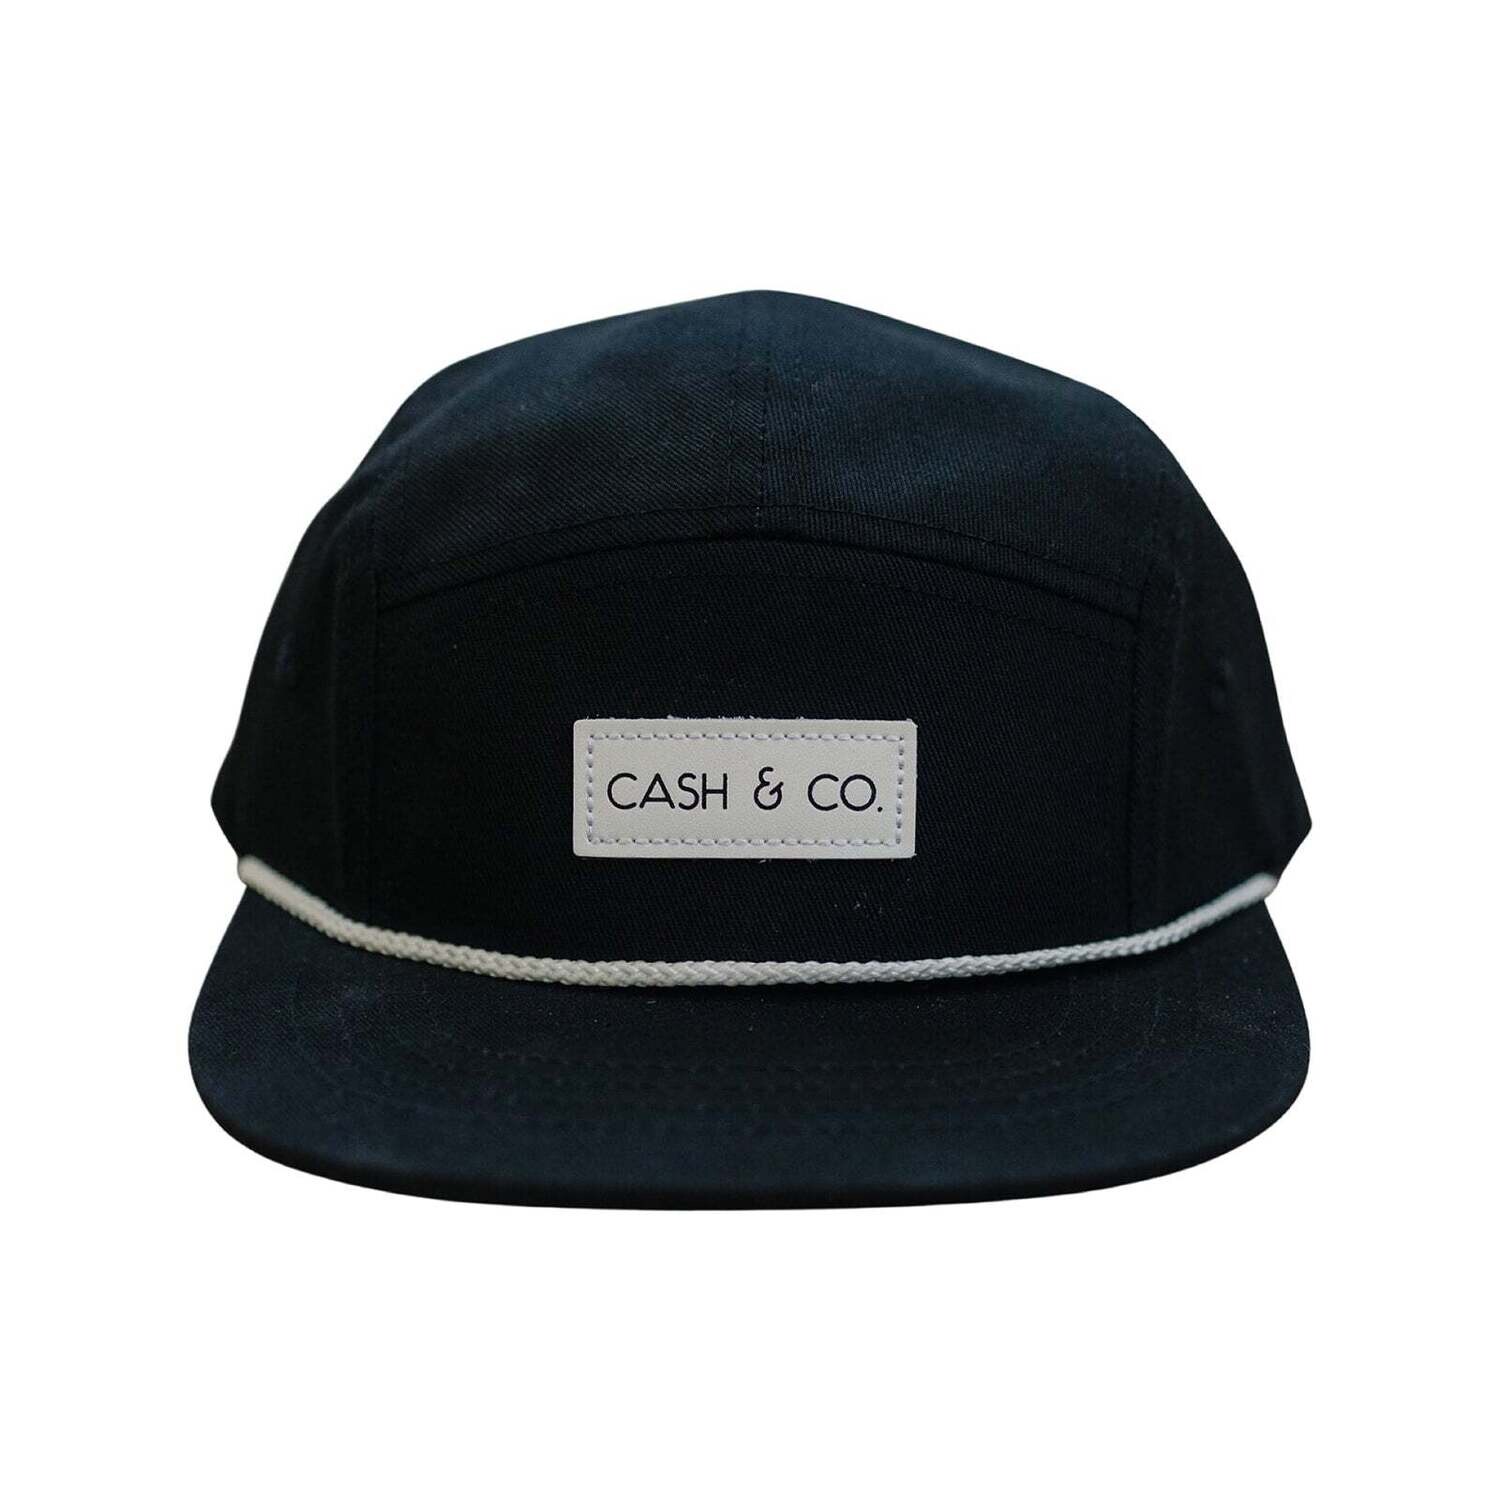 Cash & Co. Easy Hat